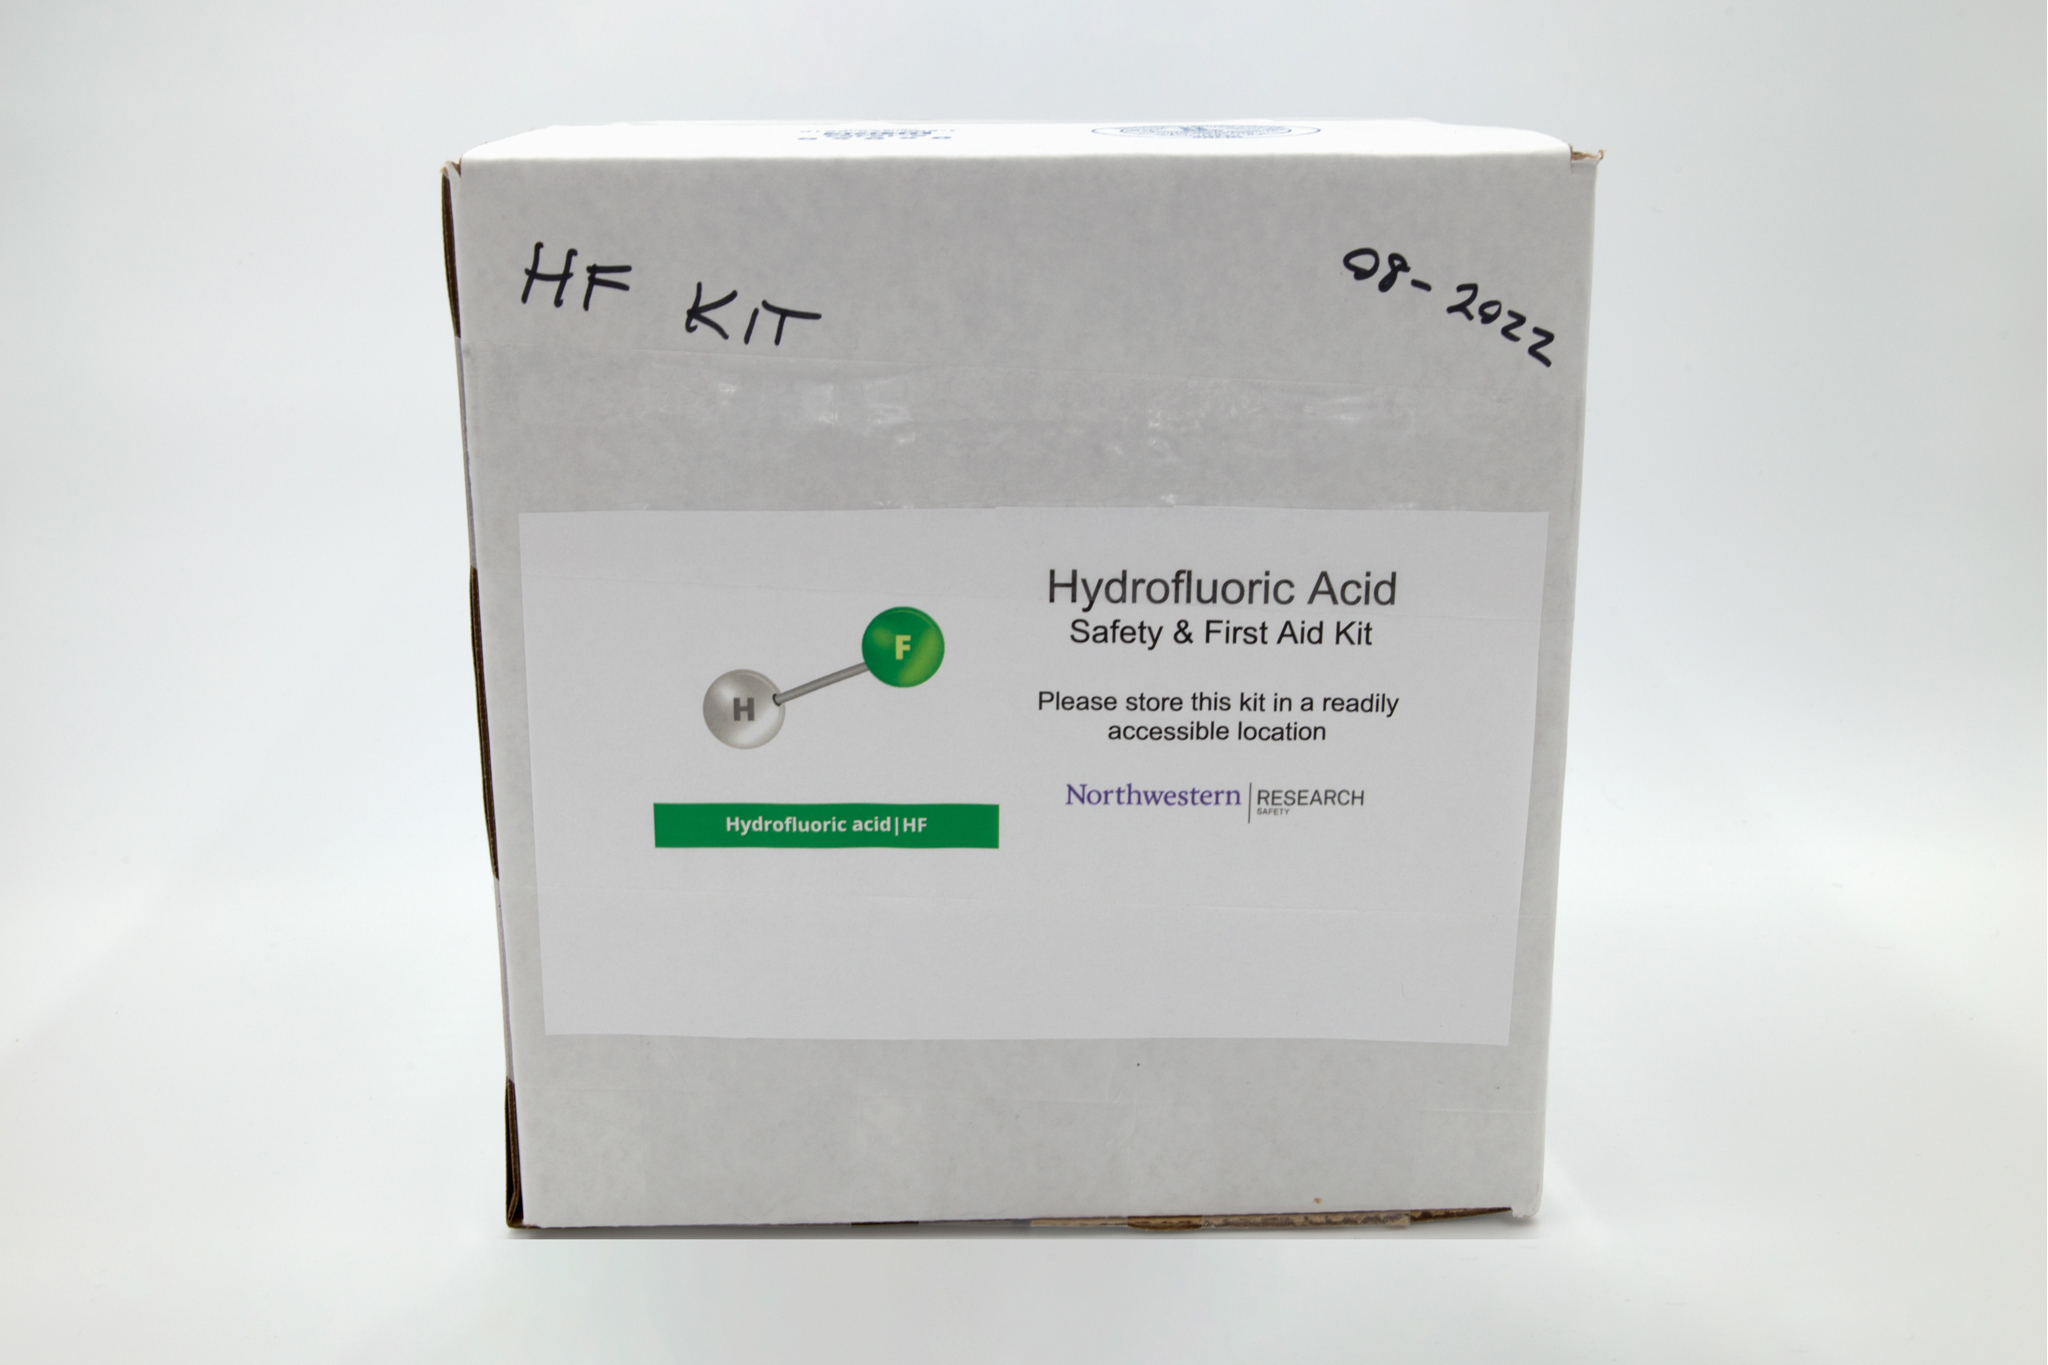 White cardboard box with "hydrofluoric acid spill kit" written on it